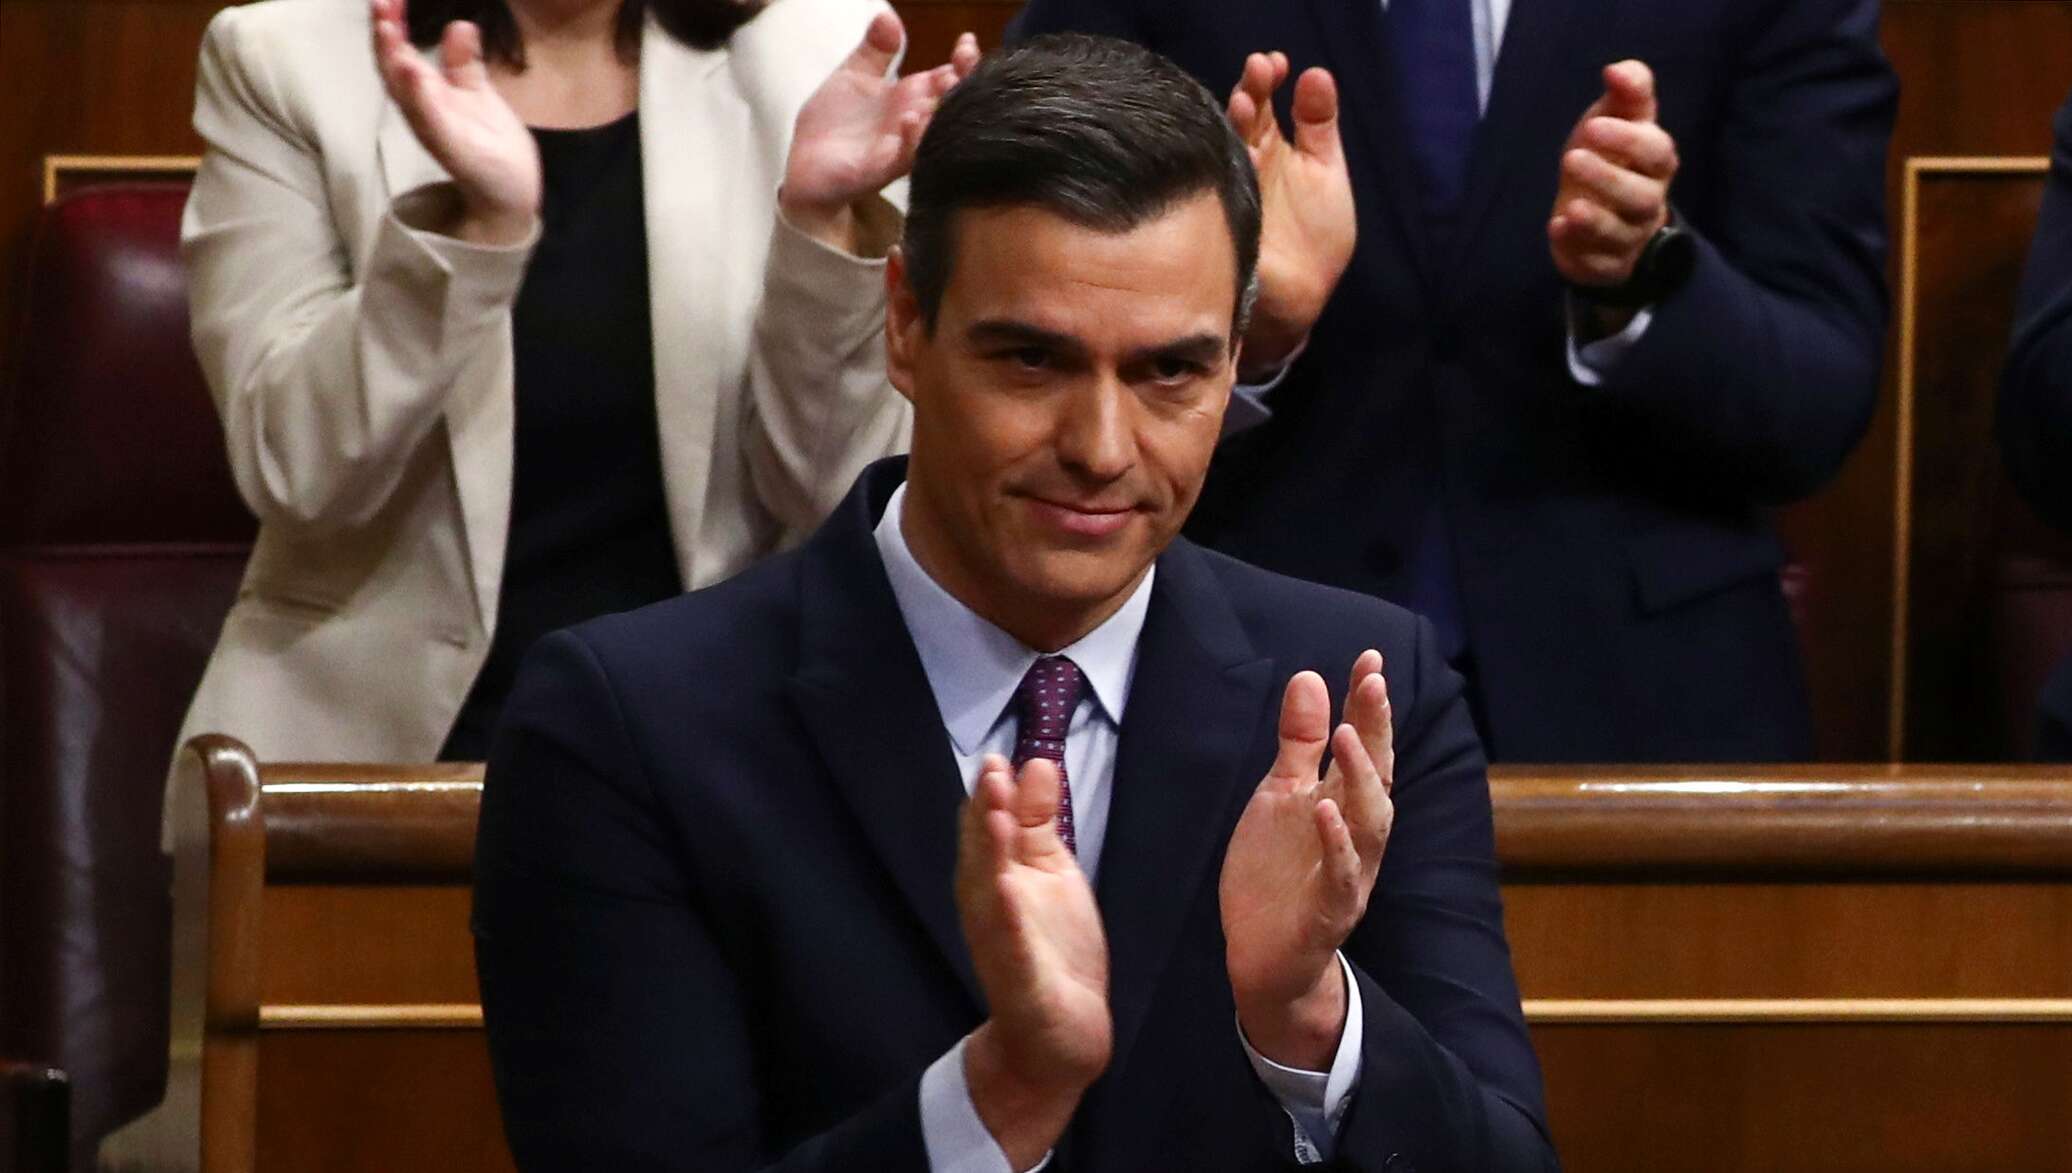 премьер министр испании